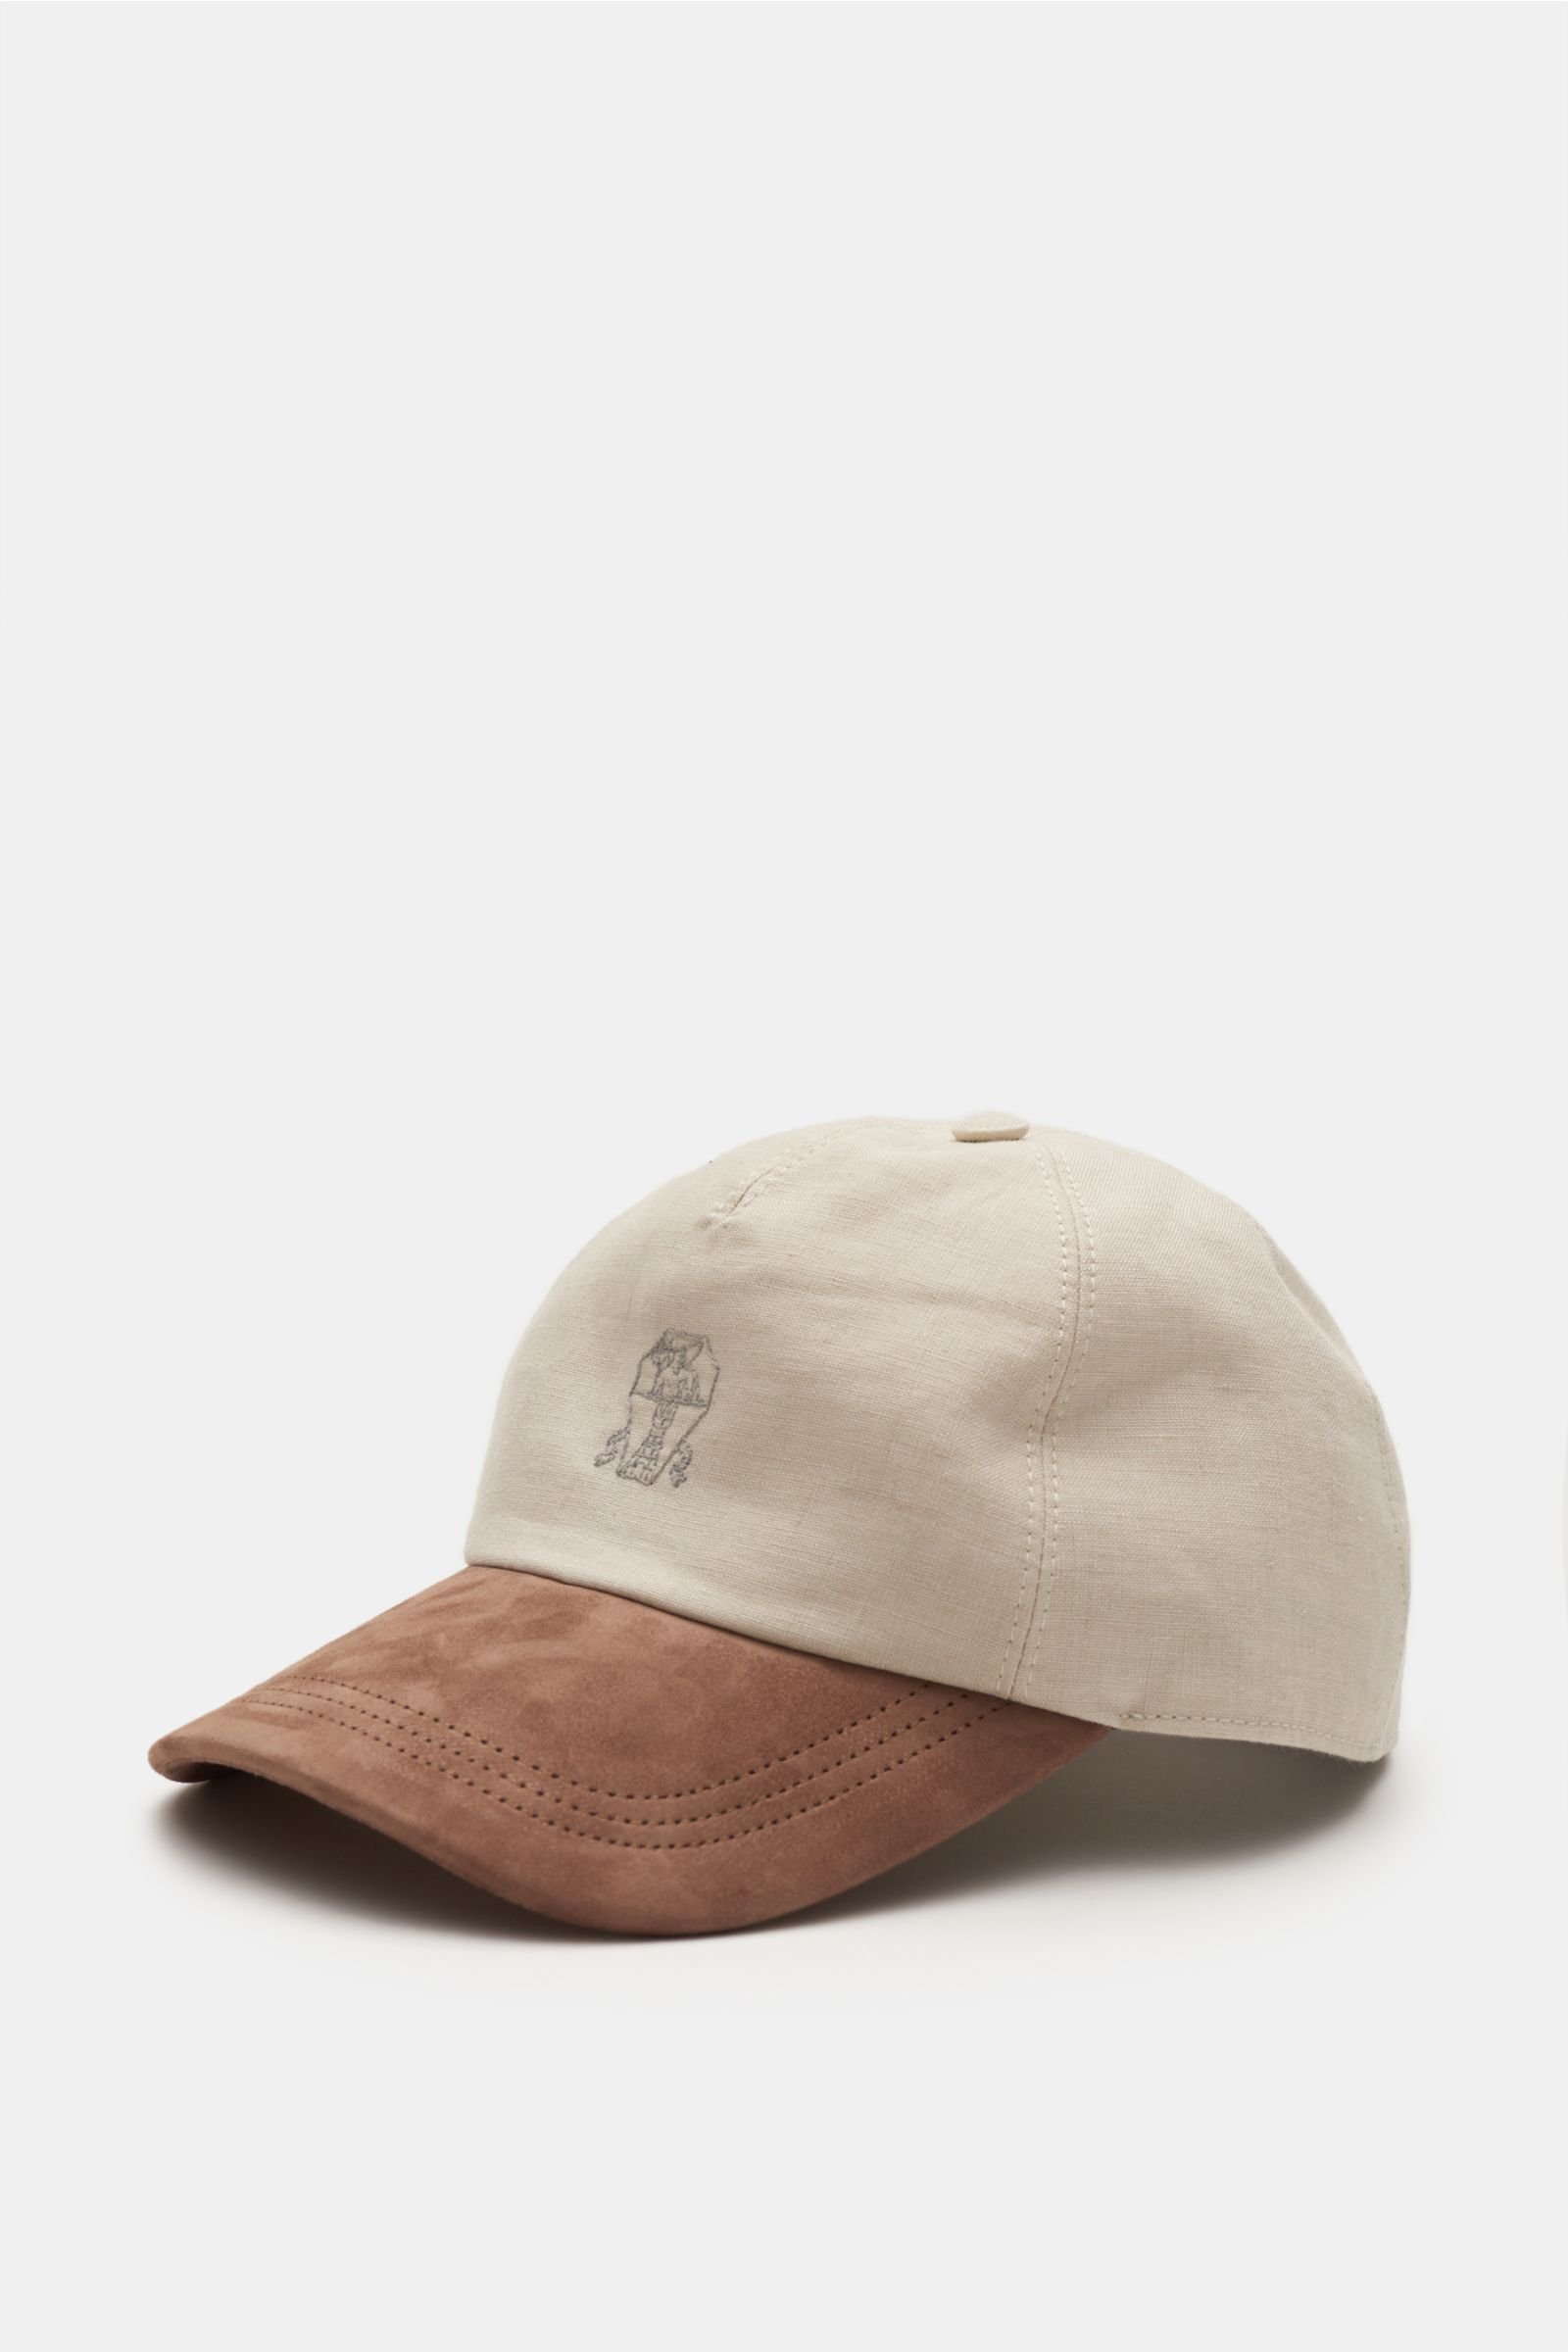 Baseball cap beige/brown